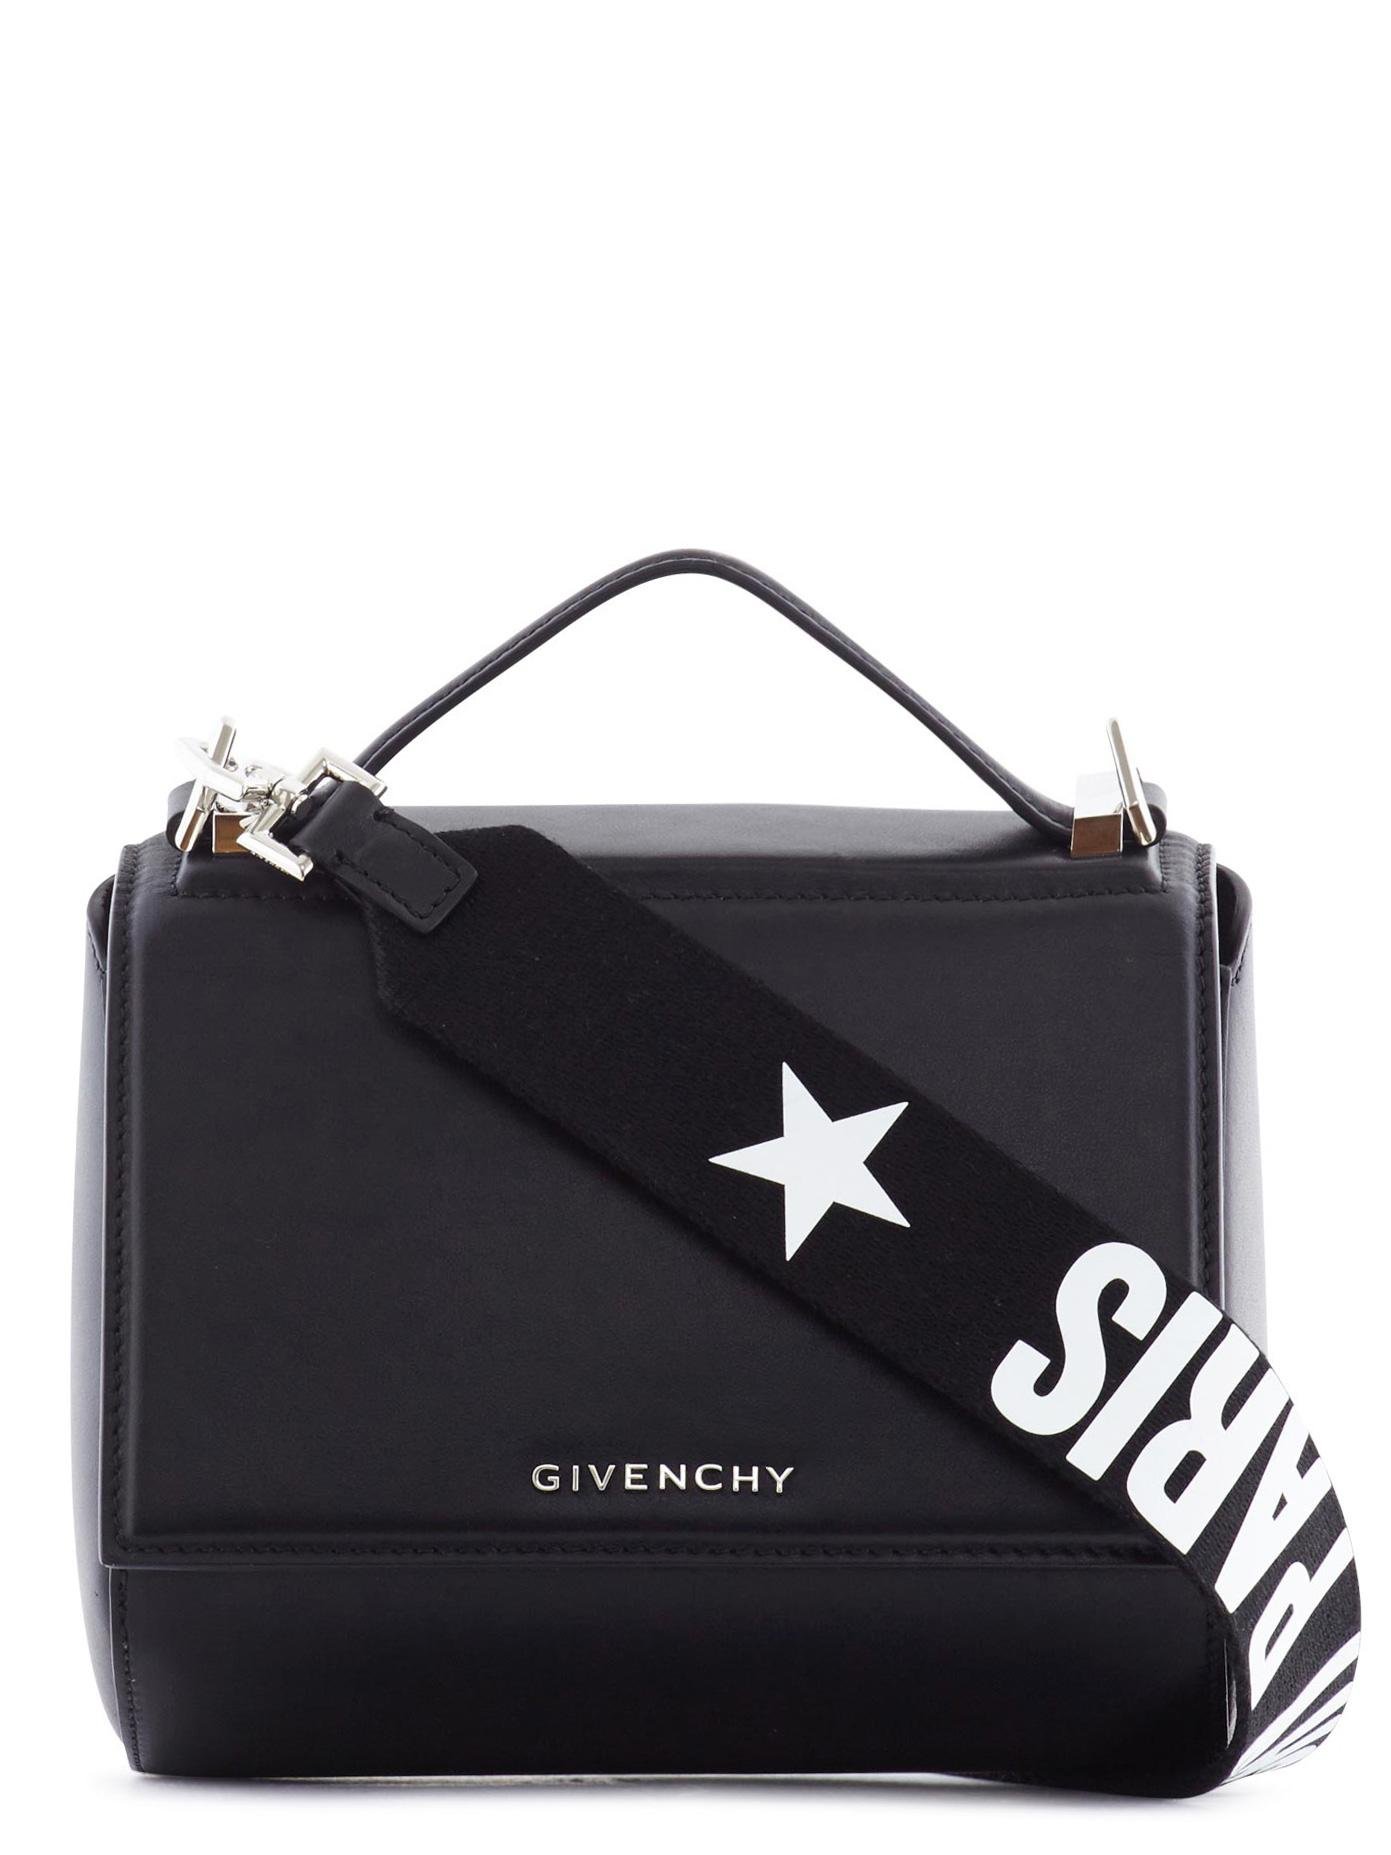 Givenchy Paris Box Logo The Art Of Mike Mignola - givenchy paris roblox